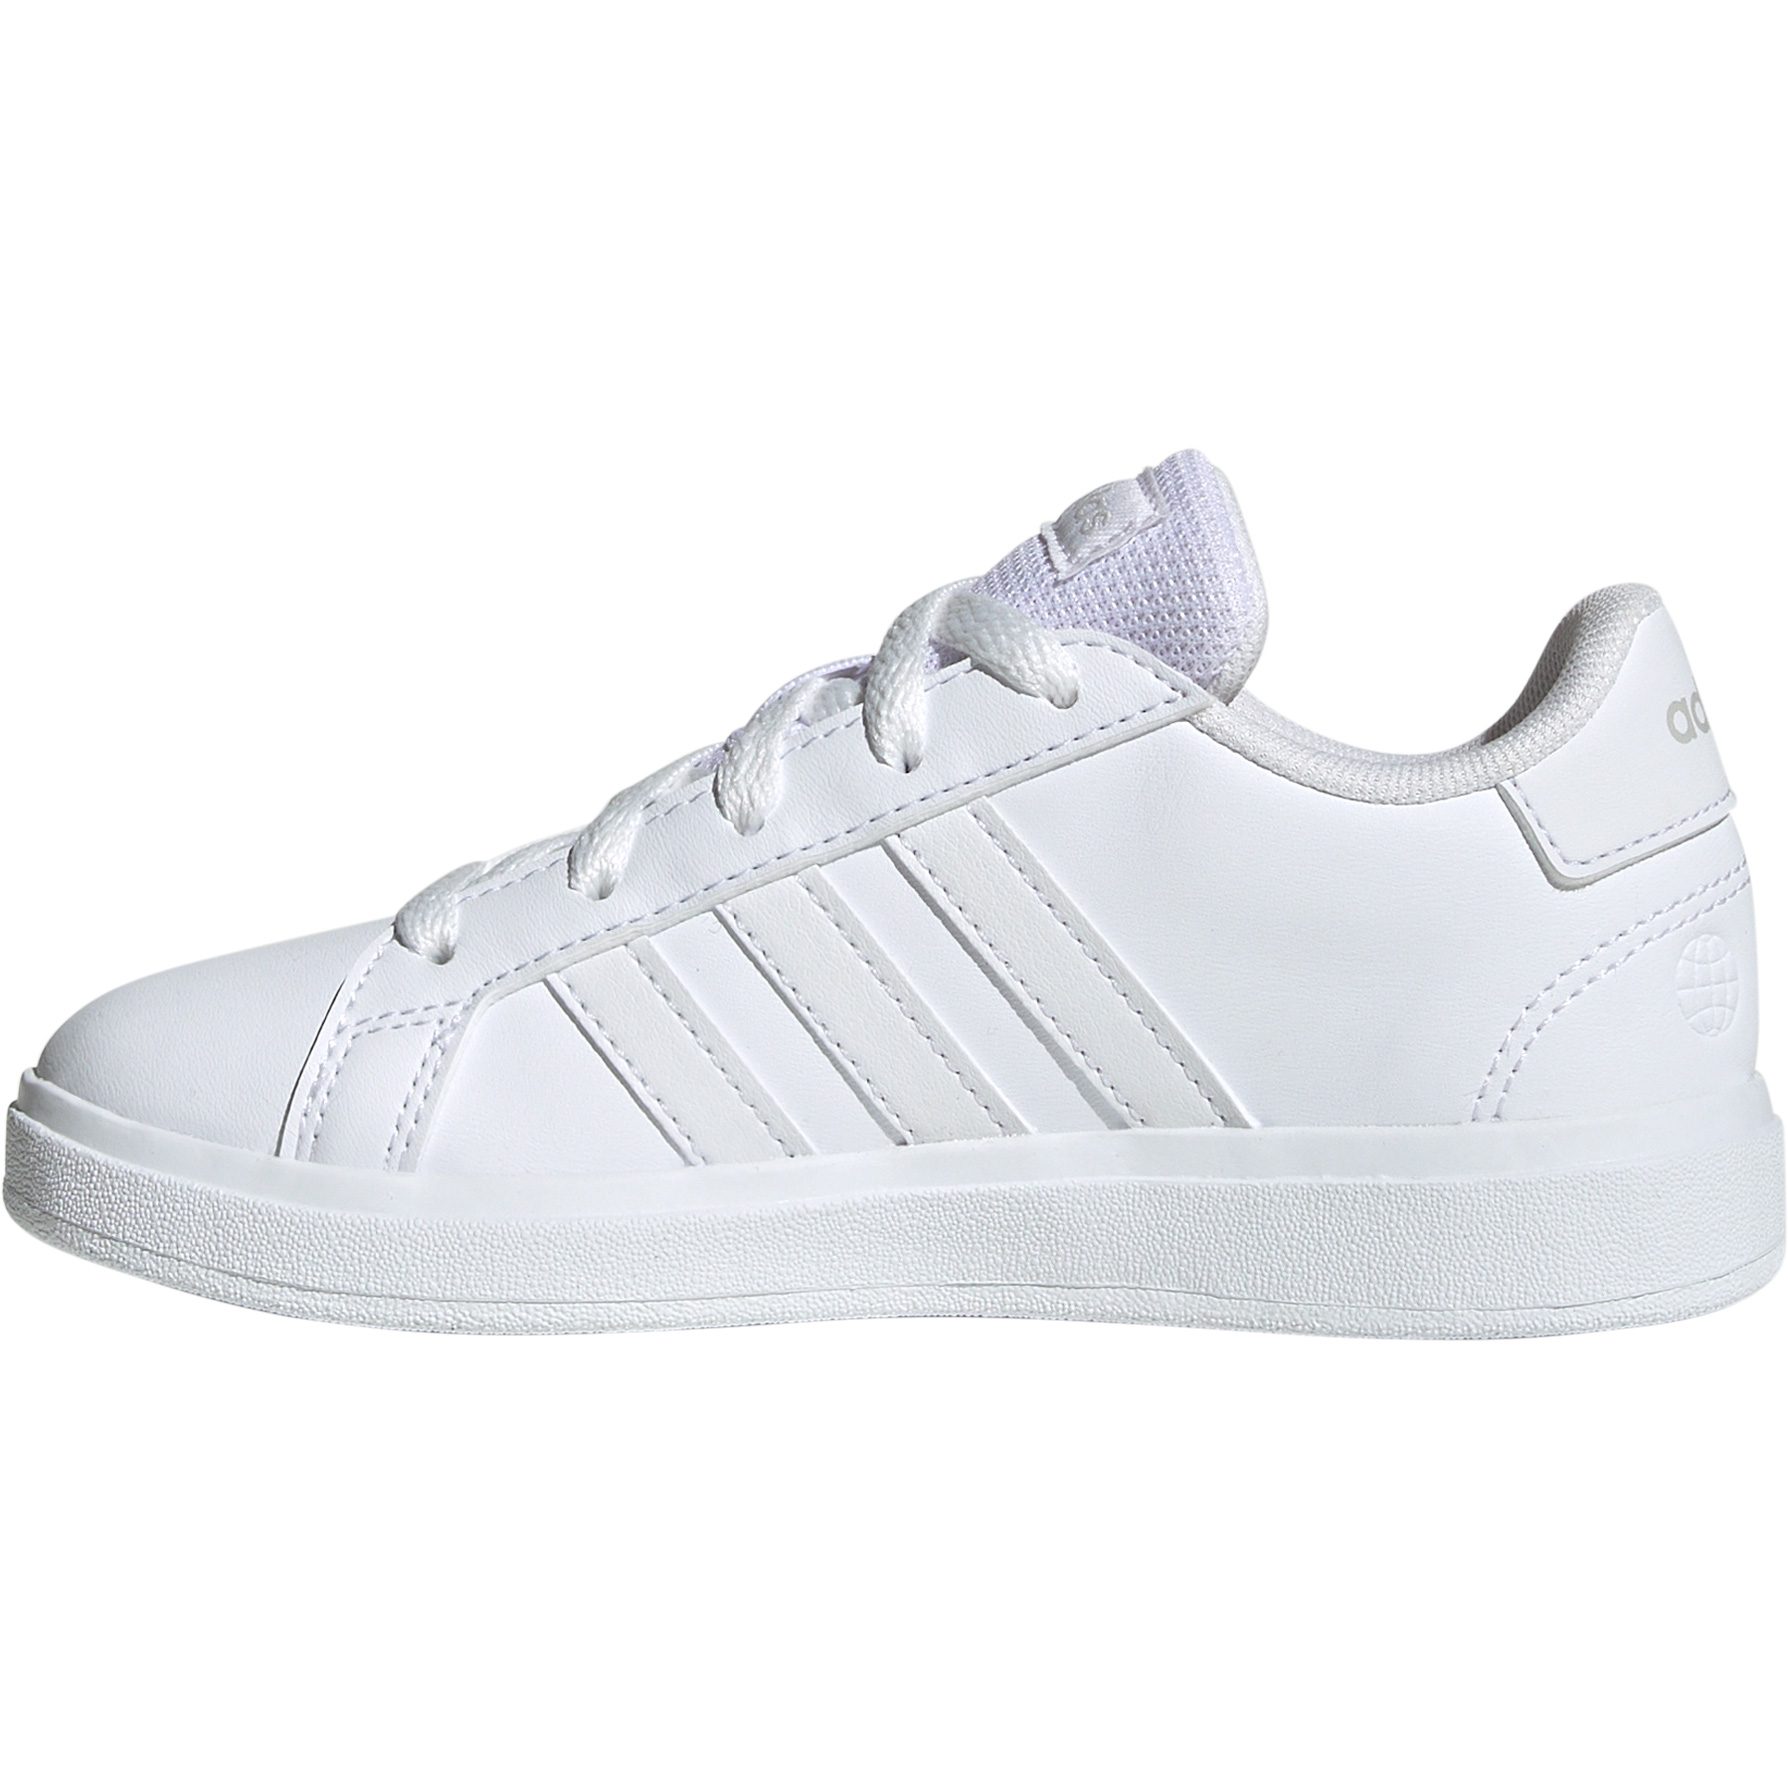 Sluit een verzekering af Eik Disco adidas - Grand Court 2.0 Sneaker Kids footwear white at Sport Bittl Shop